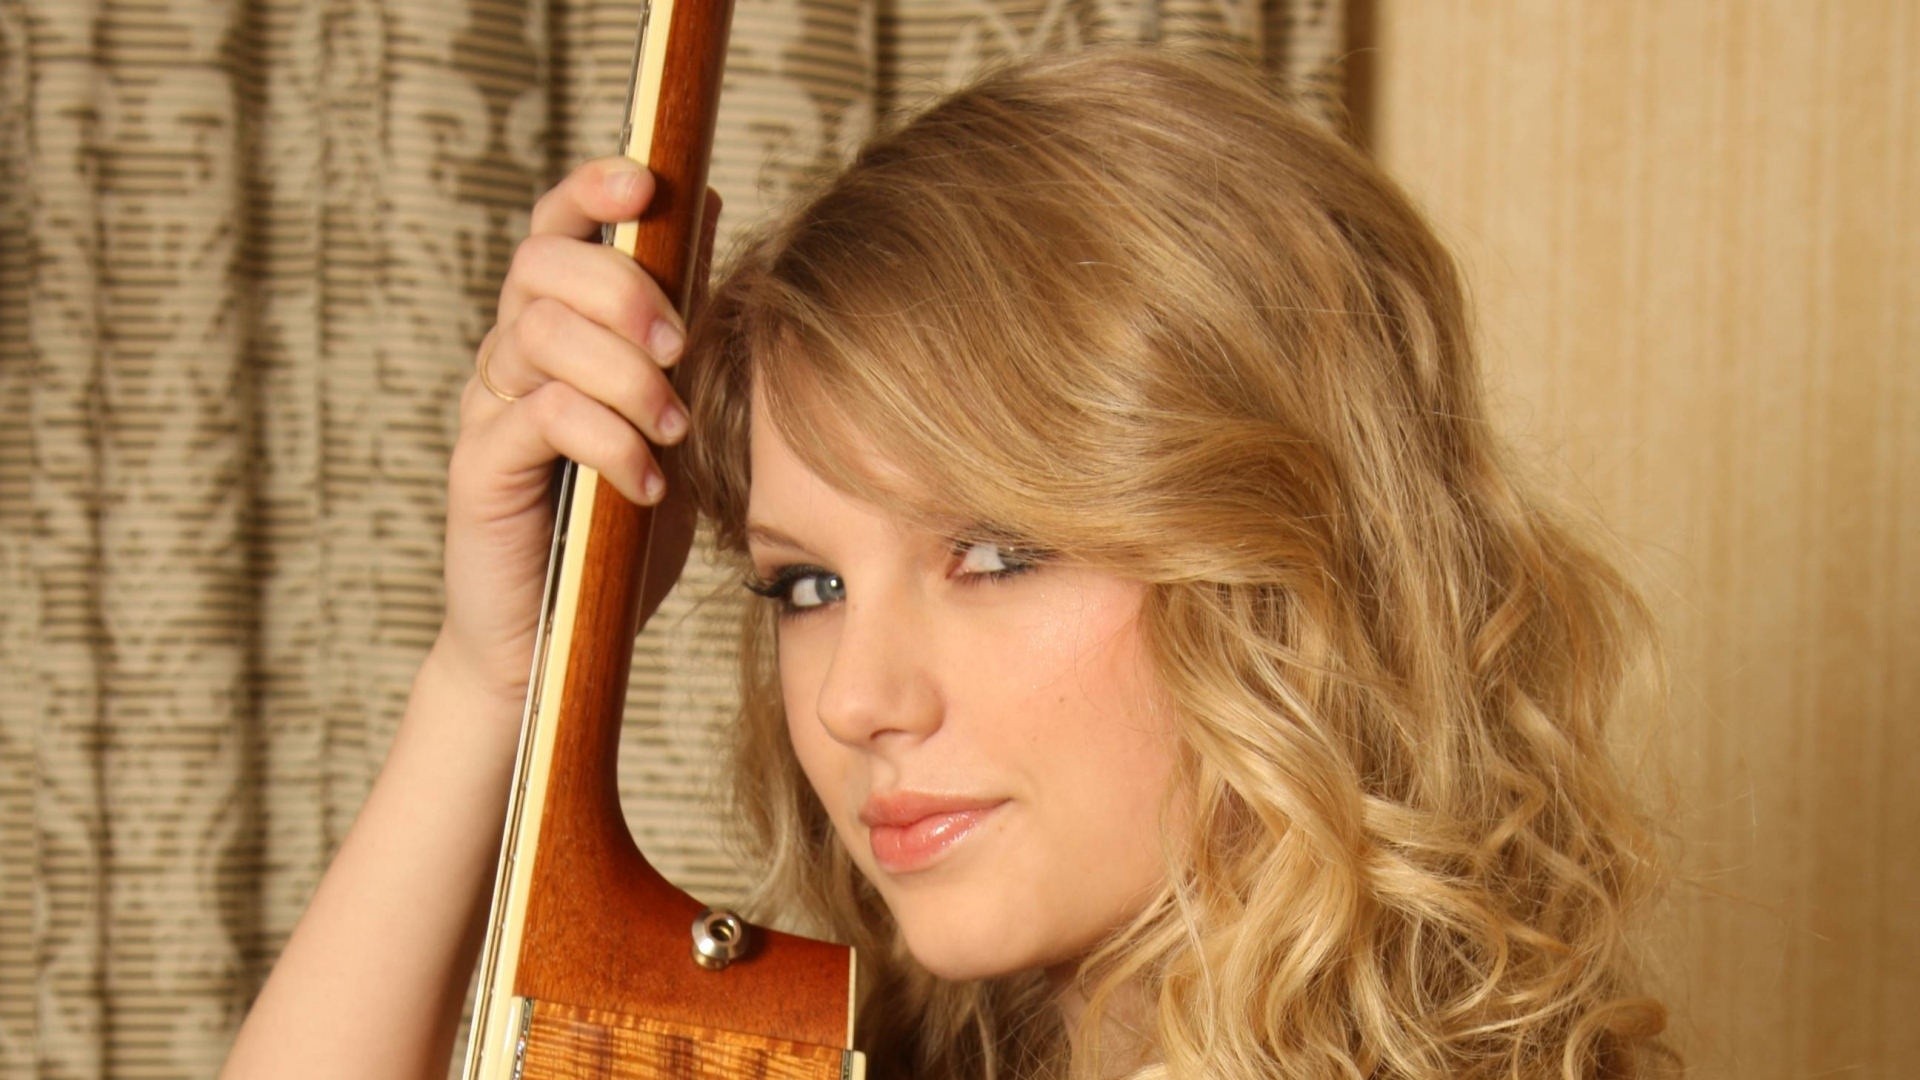 blondes, women, Taylor Swift, celebrity, guitars - desktop wallpaper